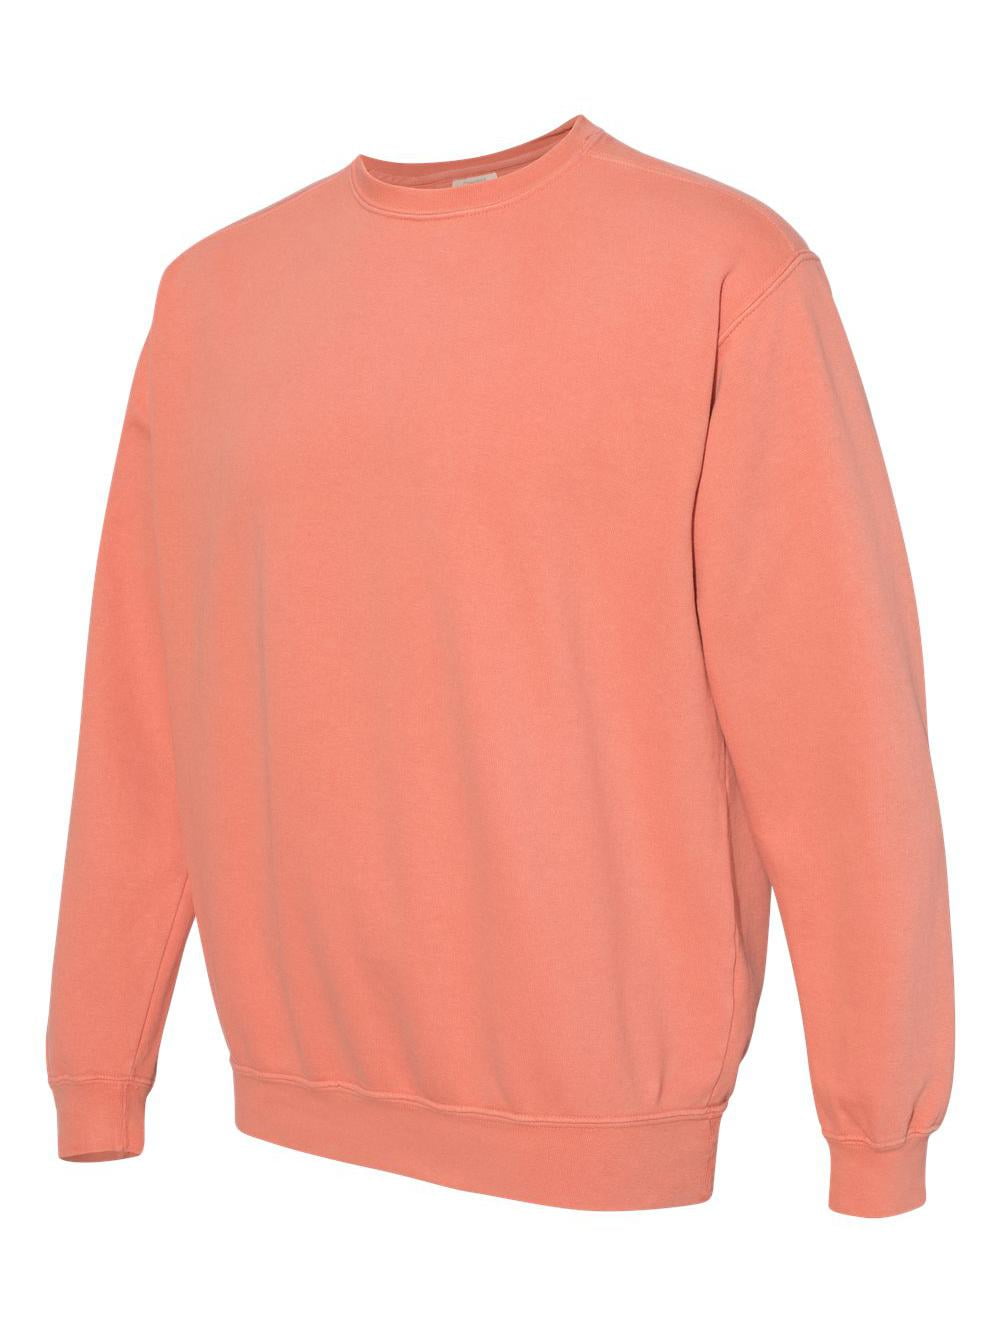 Colors Size: White Comfort - S - Sweatshirt Garment-Dyed - 1566 -